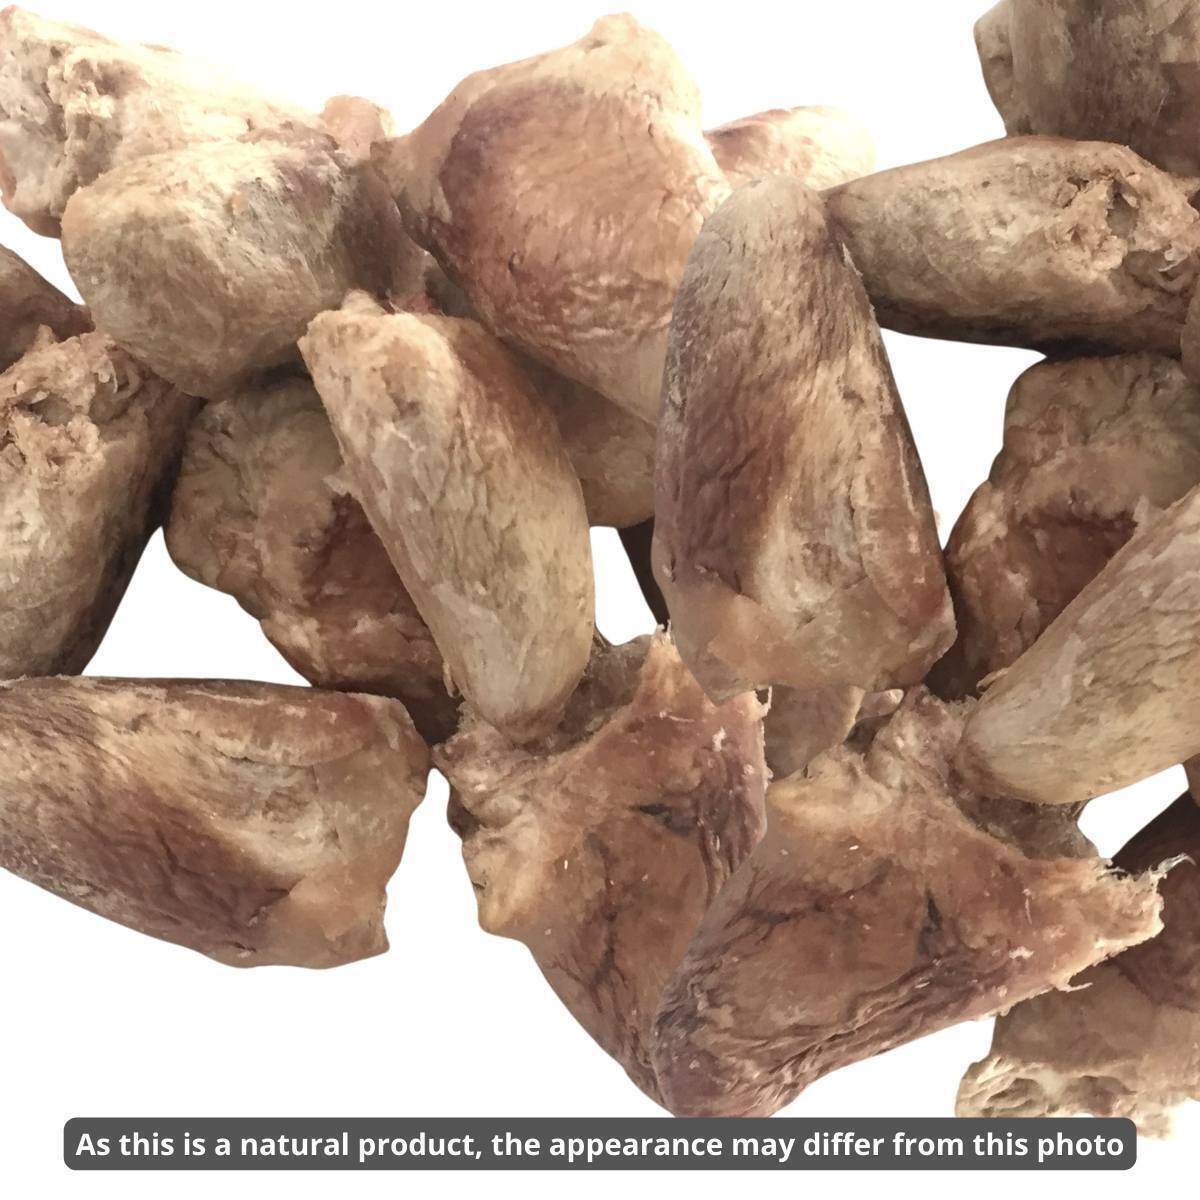 Meaty Treaty Freeze Dried Australian Chicken Hearts Cat & Dog Treats 100g - Pets and More